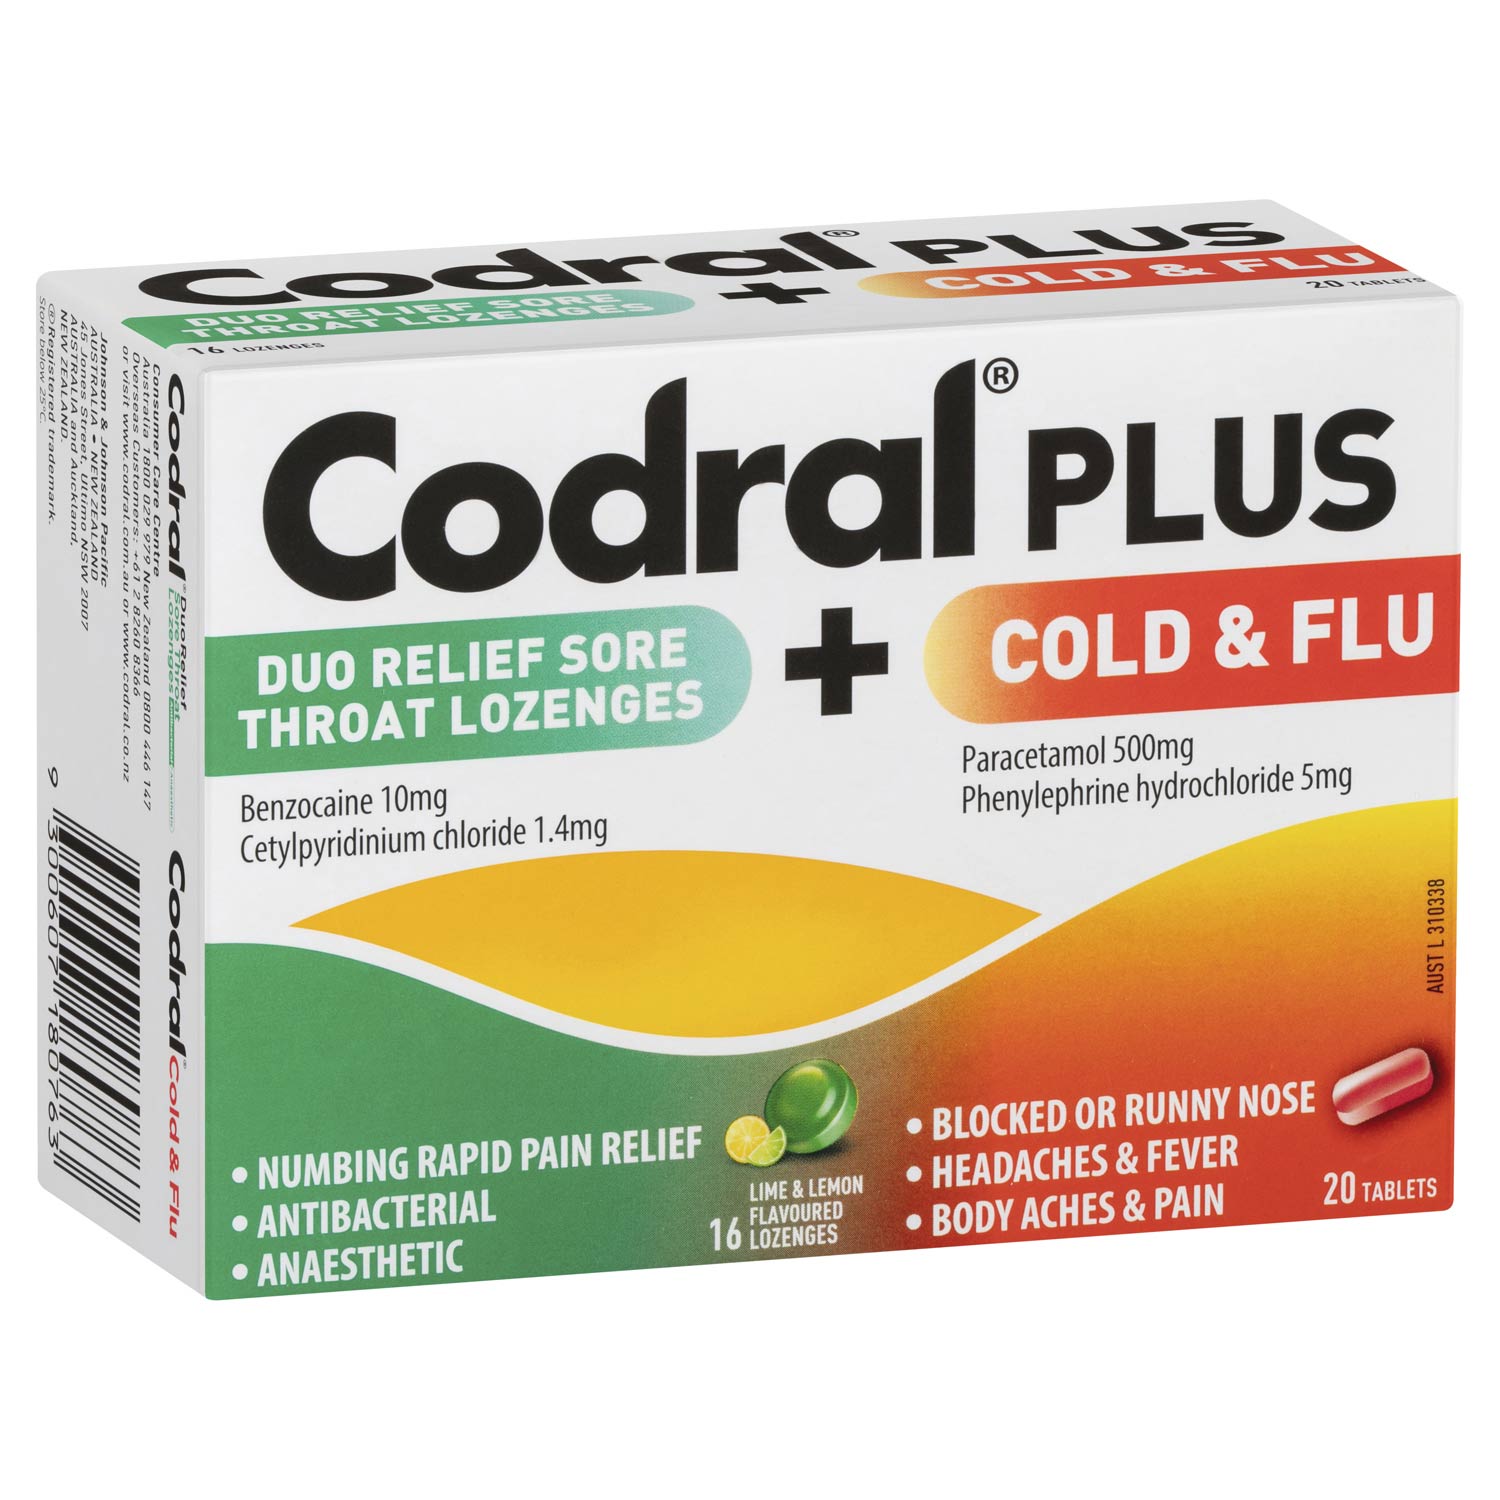 Cold таблетка. Cold/Flu Tablets. Таблетки Cold Flu. Throat Lozenge таблетки. Cold Flu Relief Индонезия.